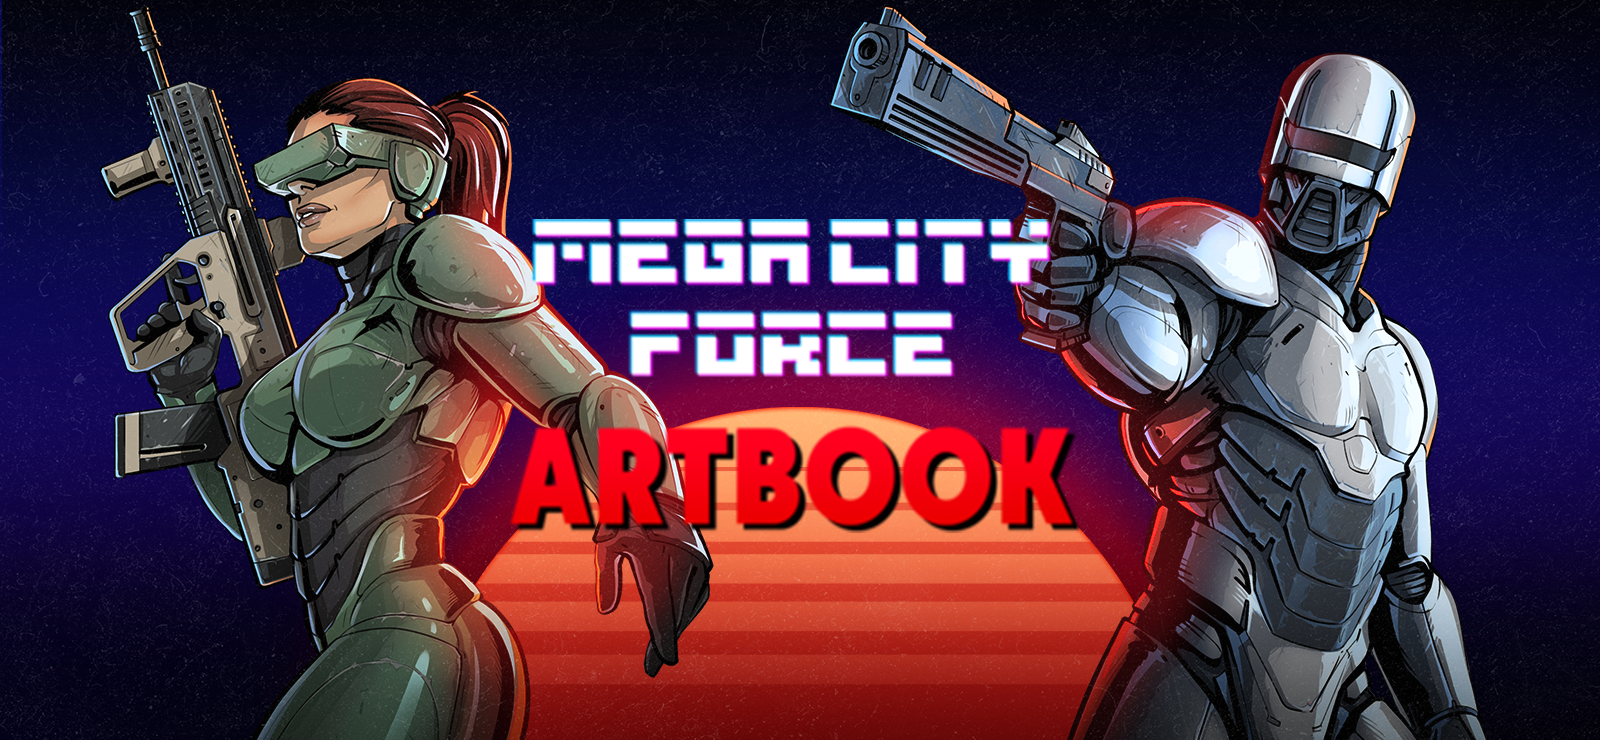 Mega City Force - Digital 80's Artbook